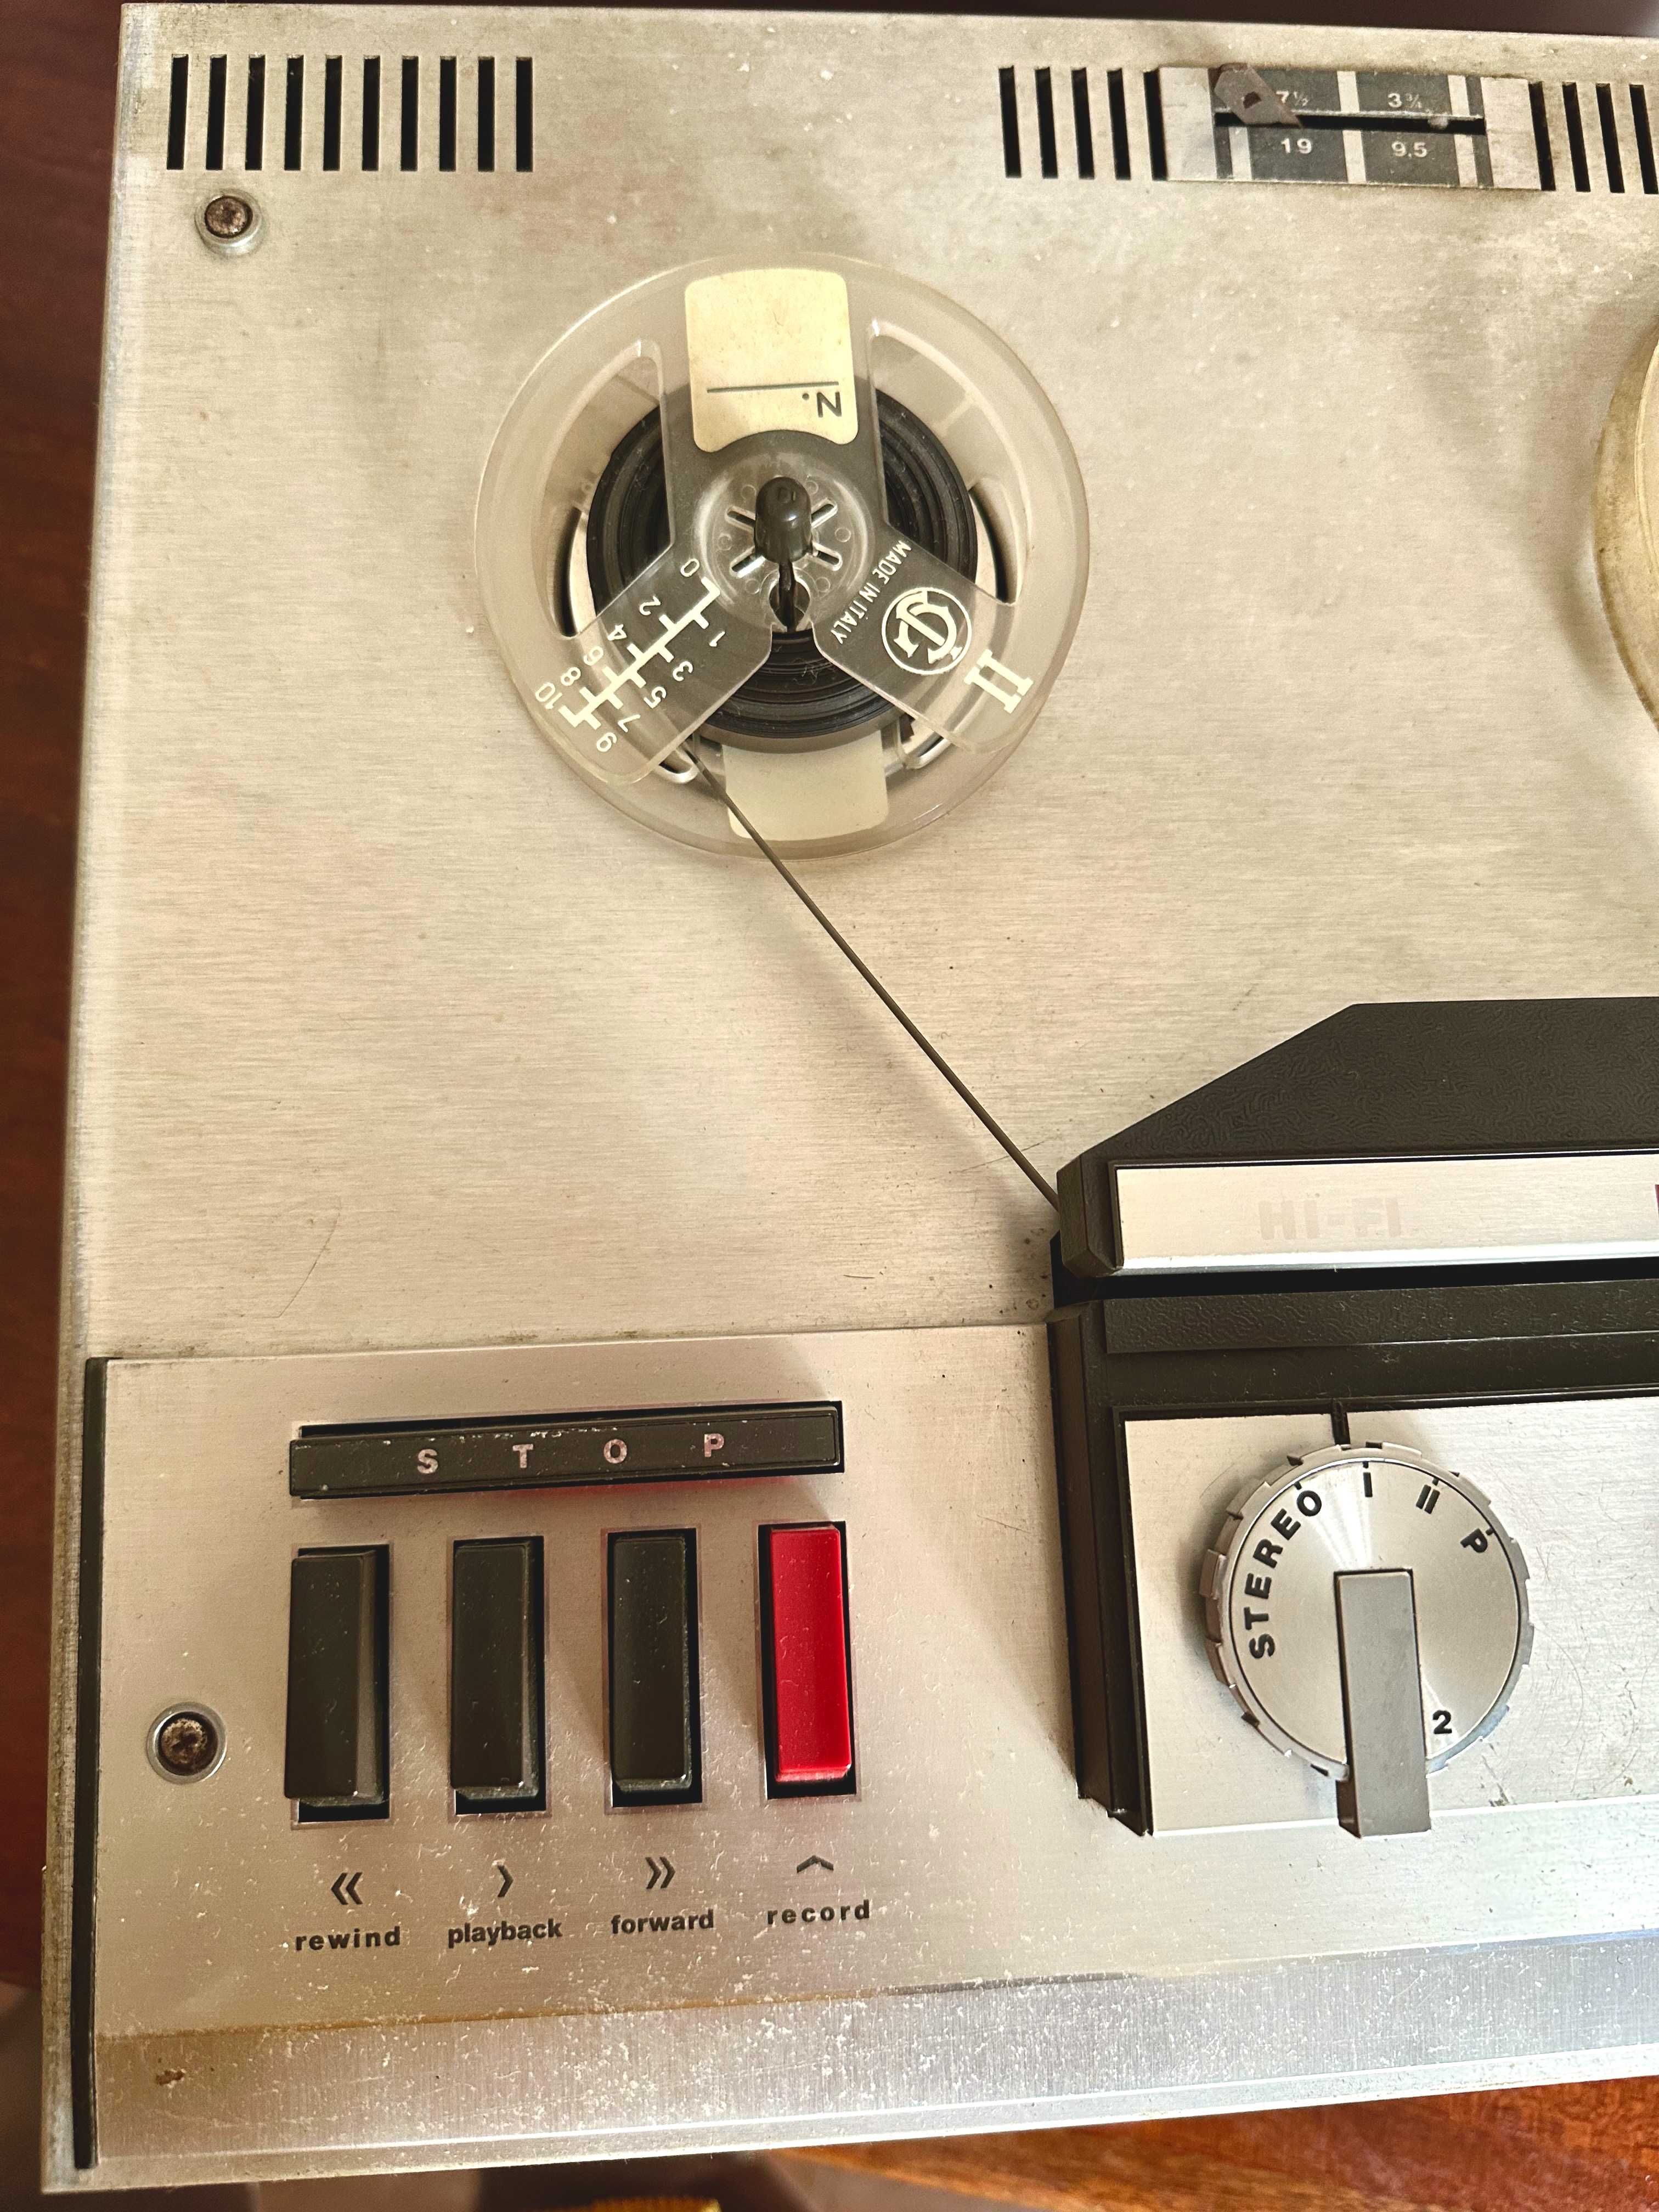 Telefunken Magnetophon Reprodutor/Gravador bobines vintage (anos 60)